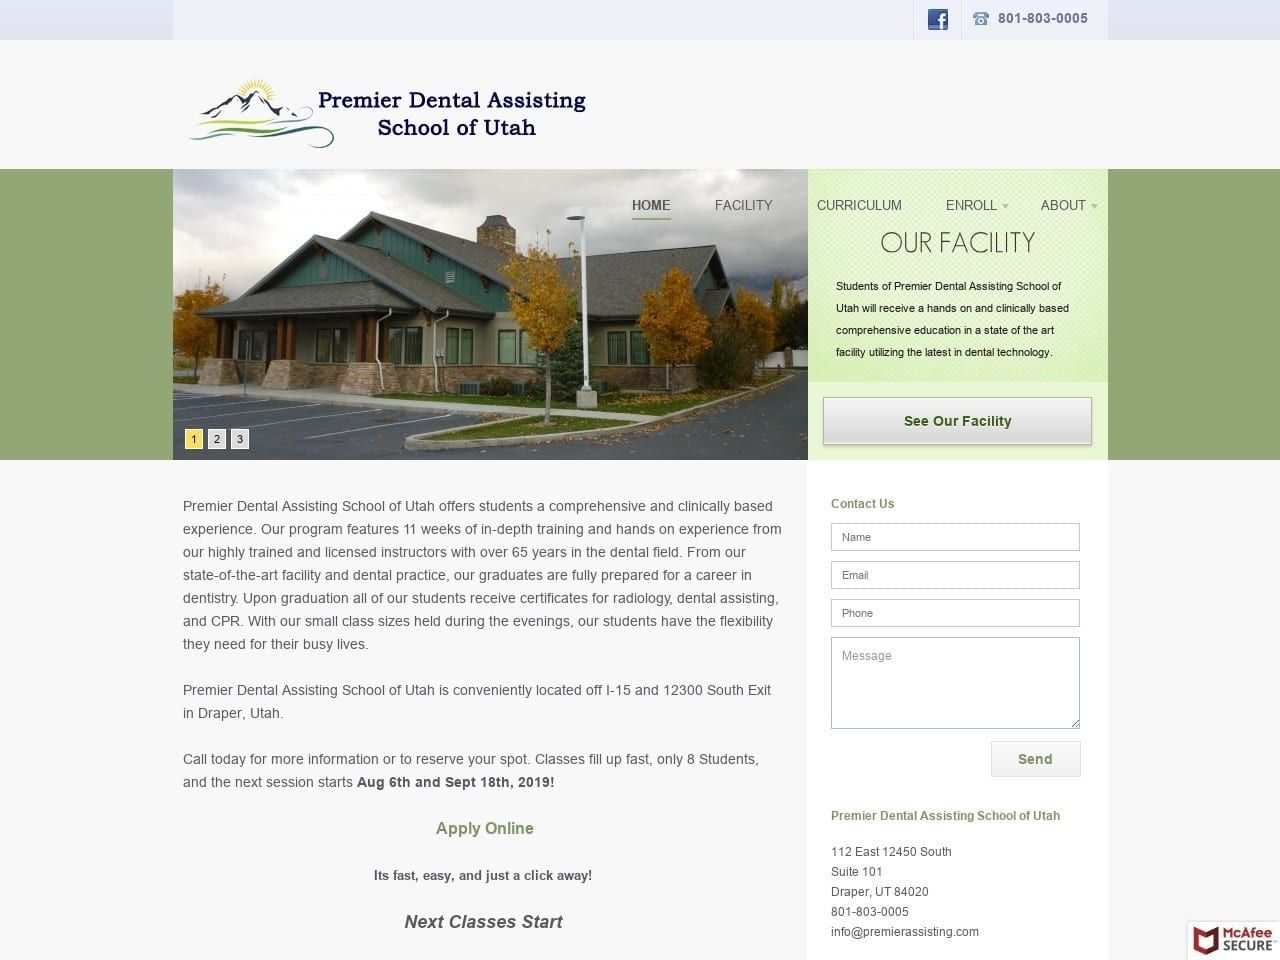 Premier Dental Assisting School of Utah Website Screenshot from premierdentalassistingschoolofutah.com